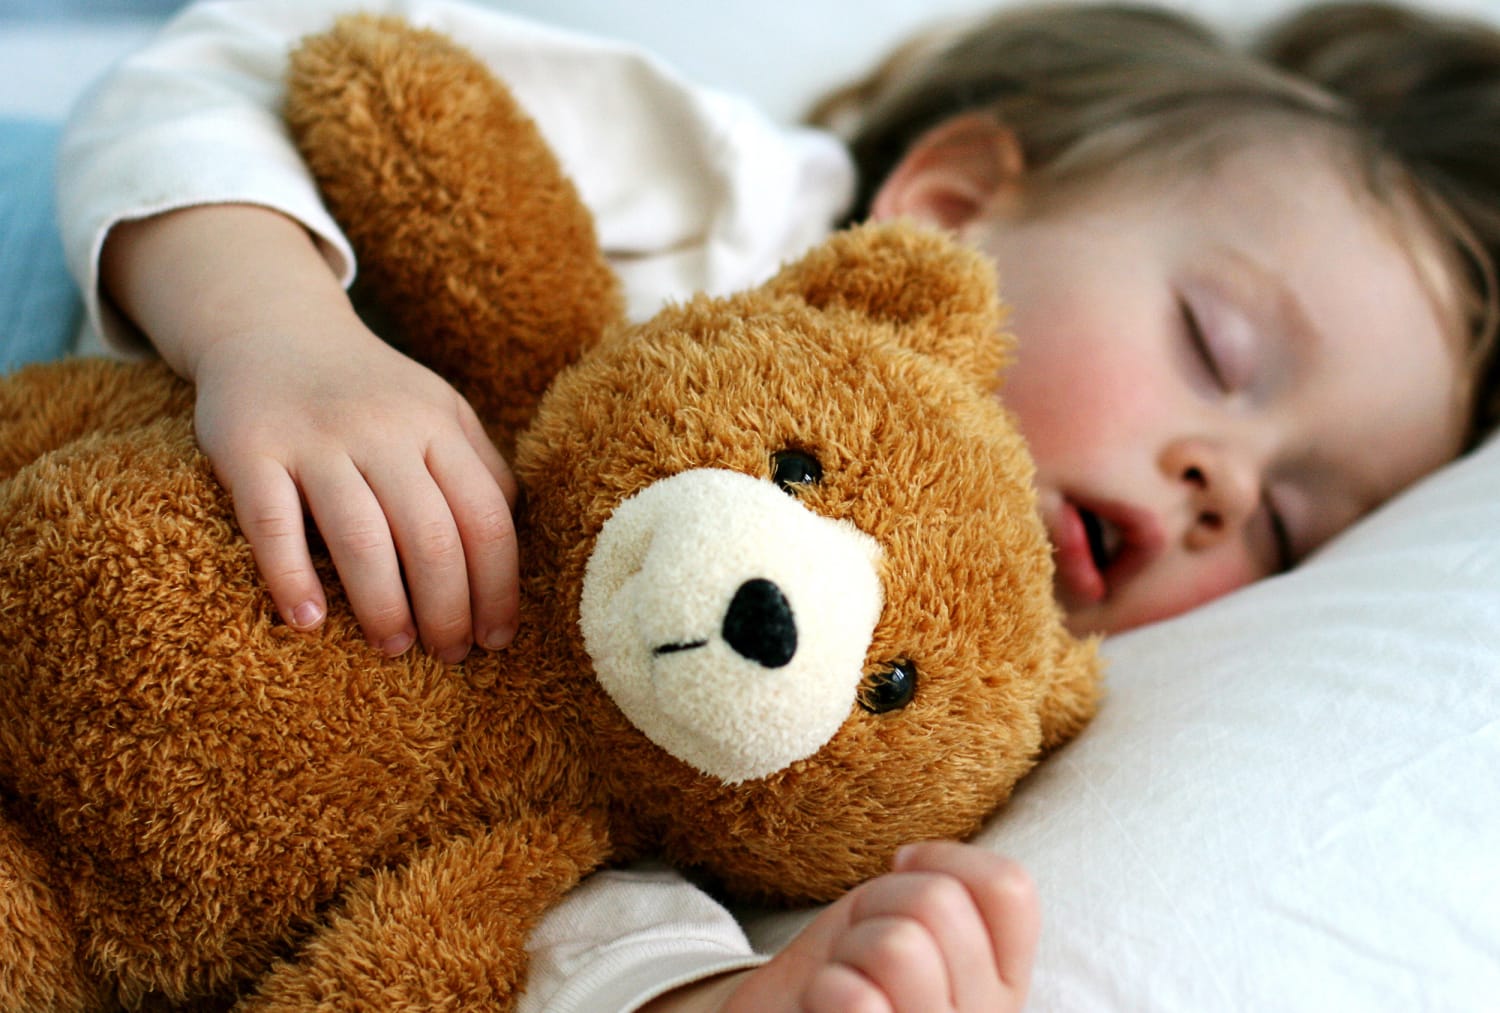 Sleeping with a stuffed animal as an 